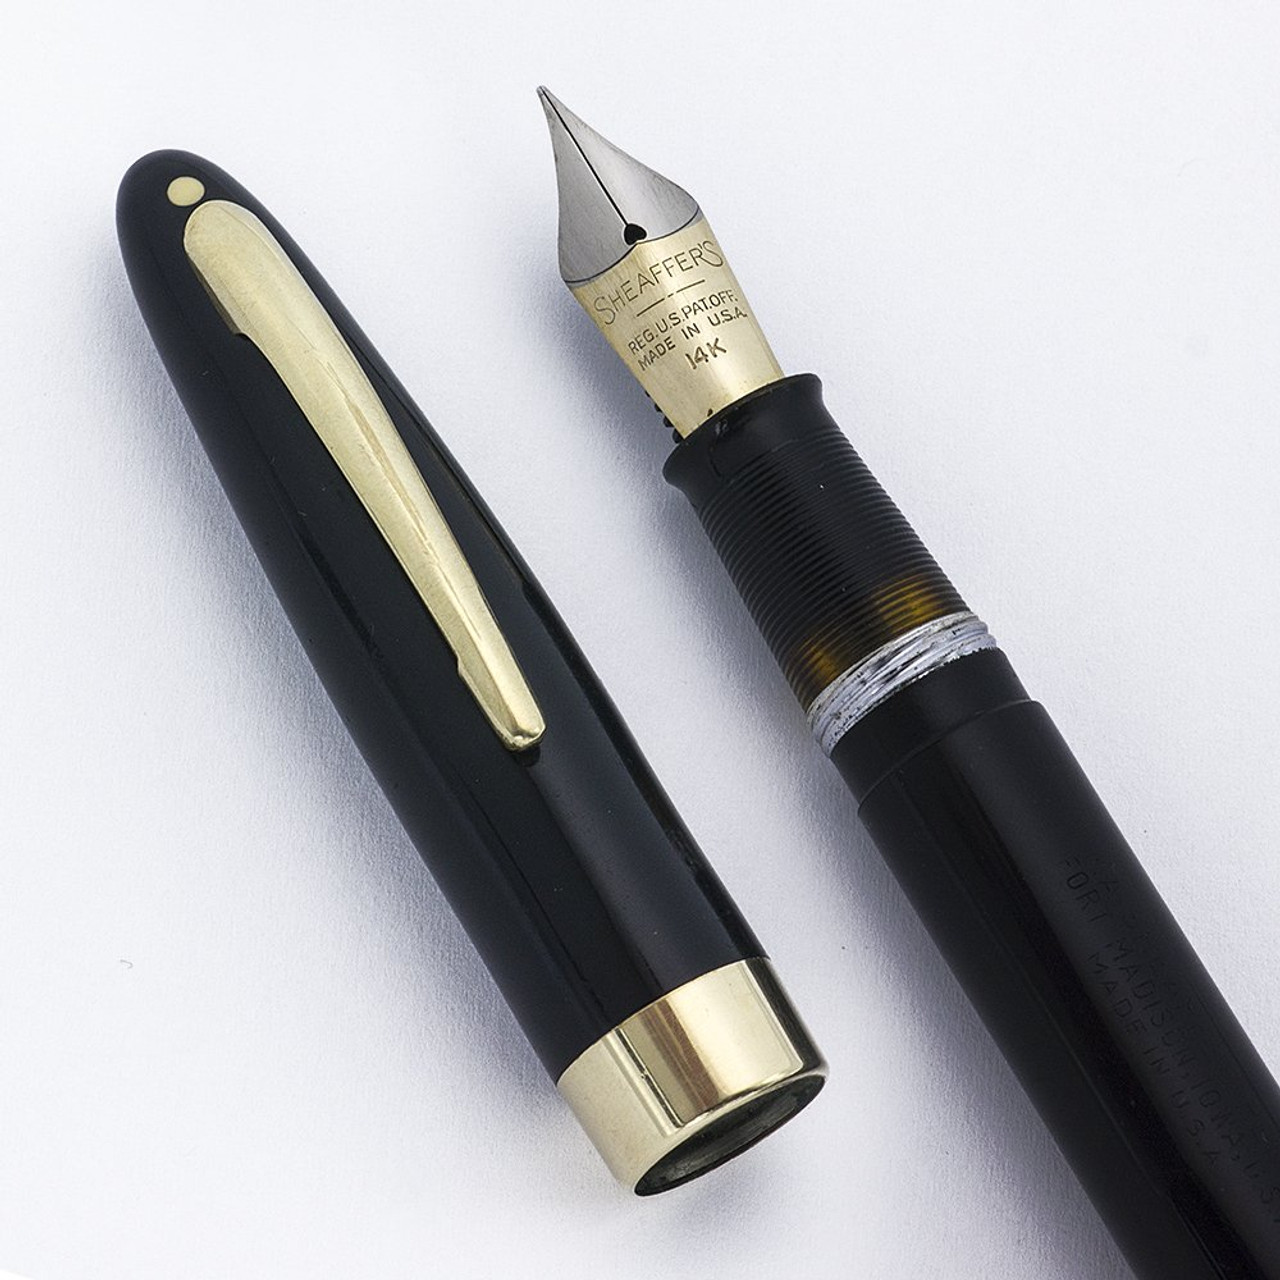 Sheaffer Stateman Fountain Pen - Black, Fat Lever Filler, Medium 14k Open Nib (Excellent, Restored)